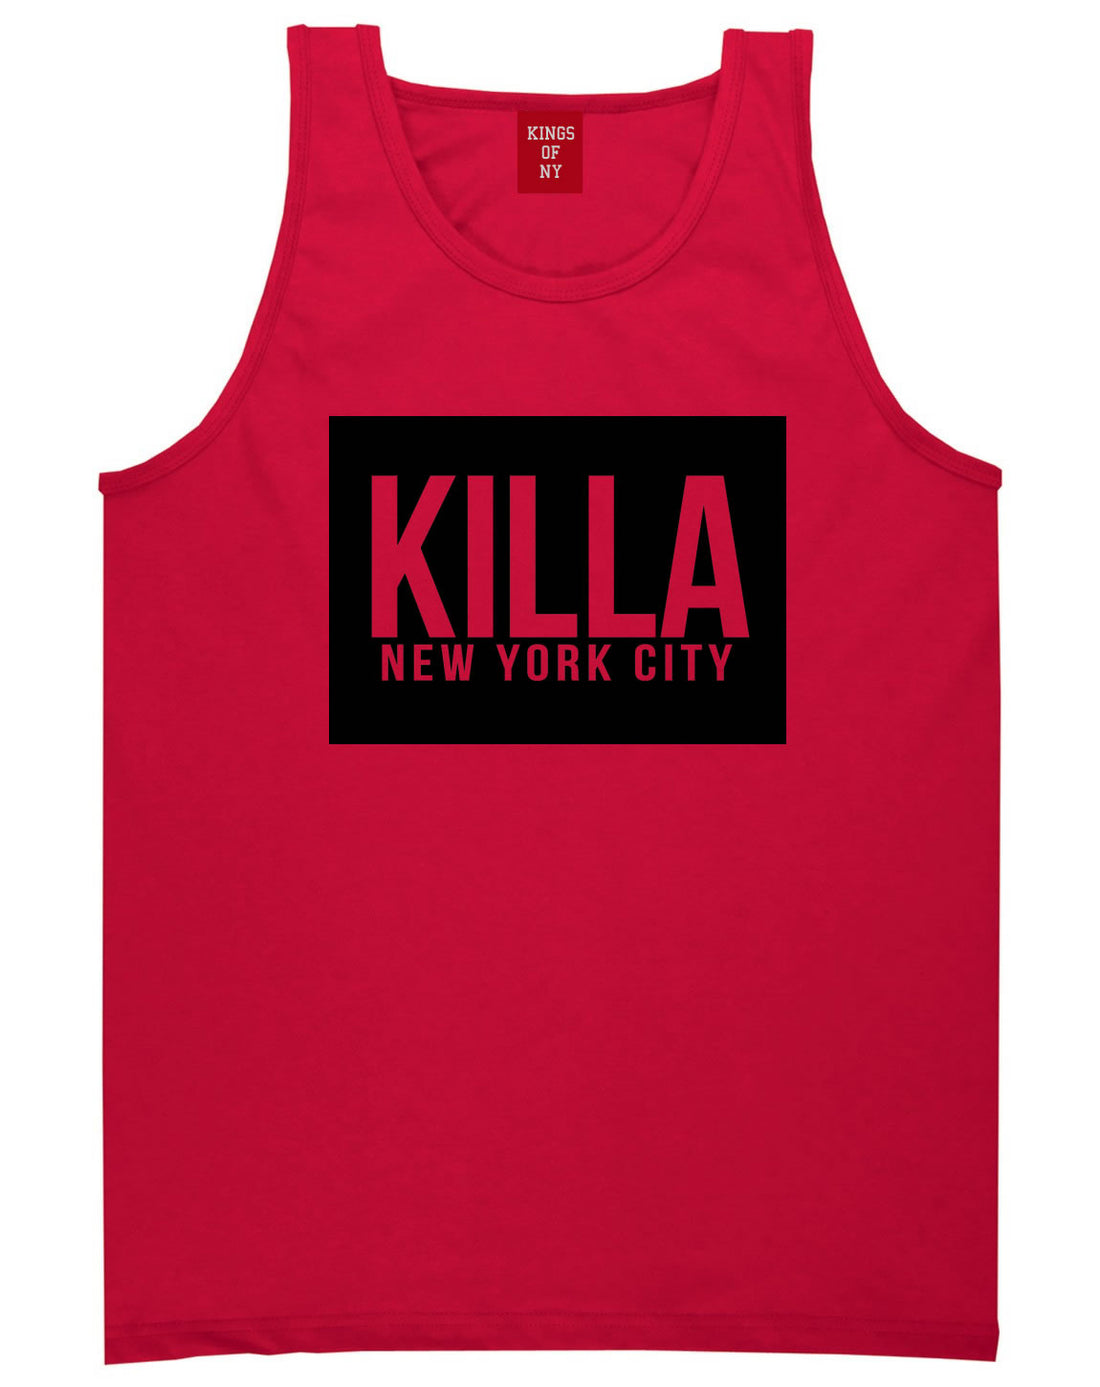 Killa New York City Harlem Tank Top in Red by Kings Of NY